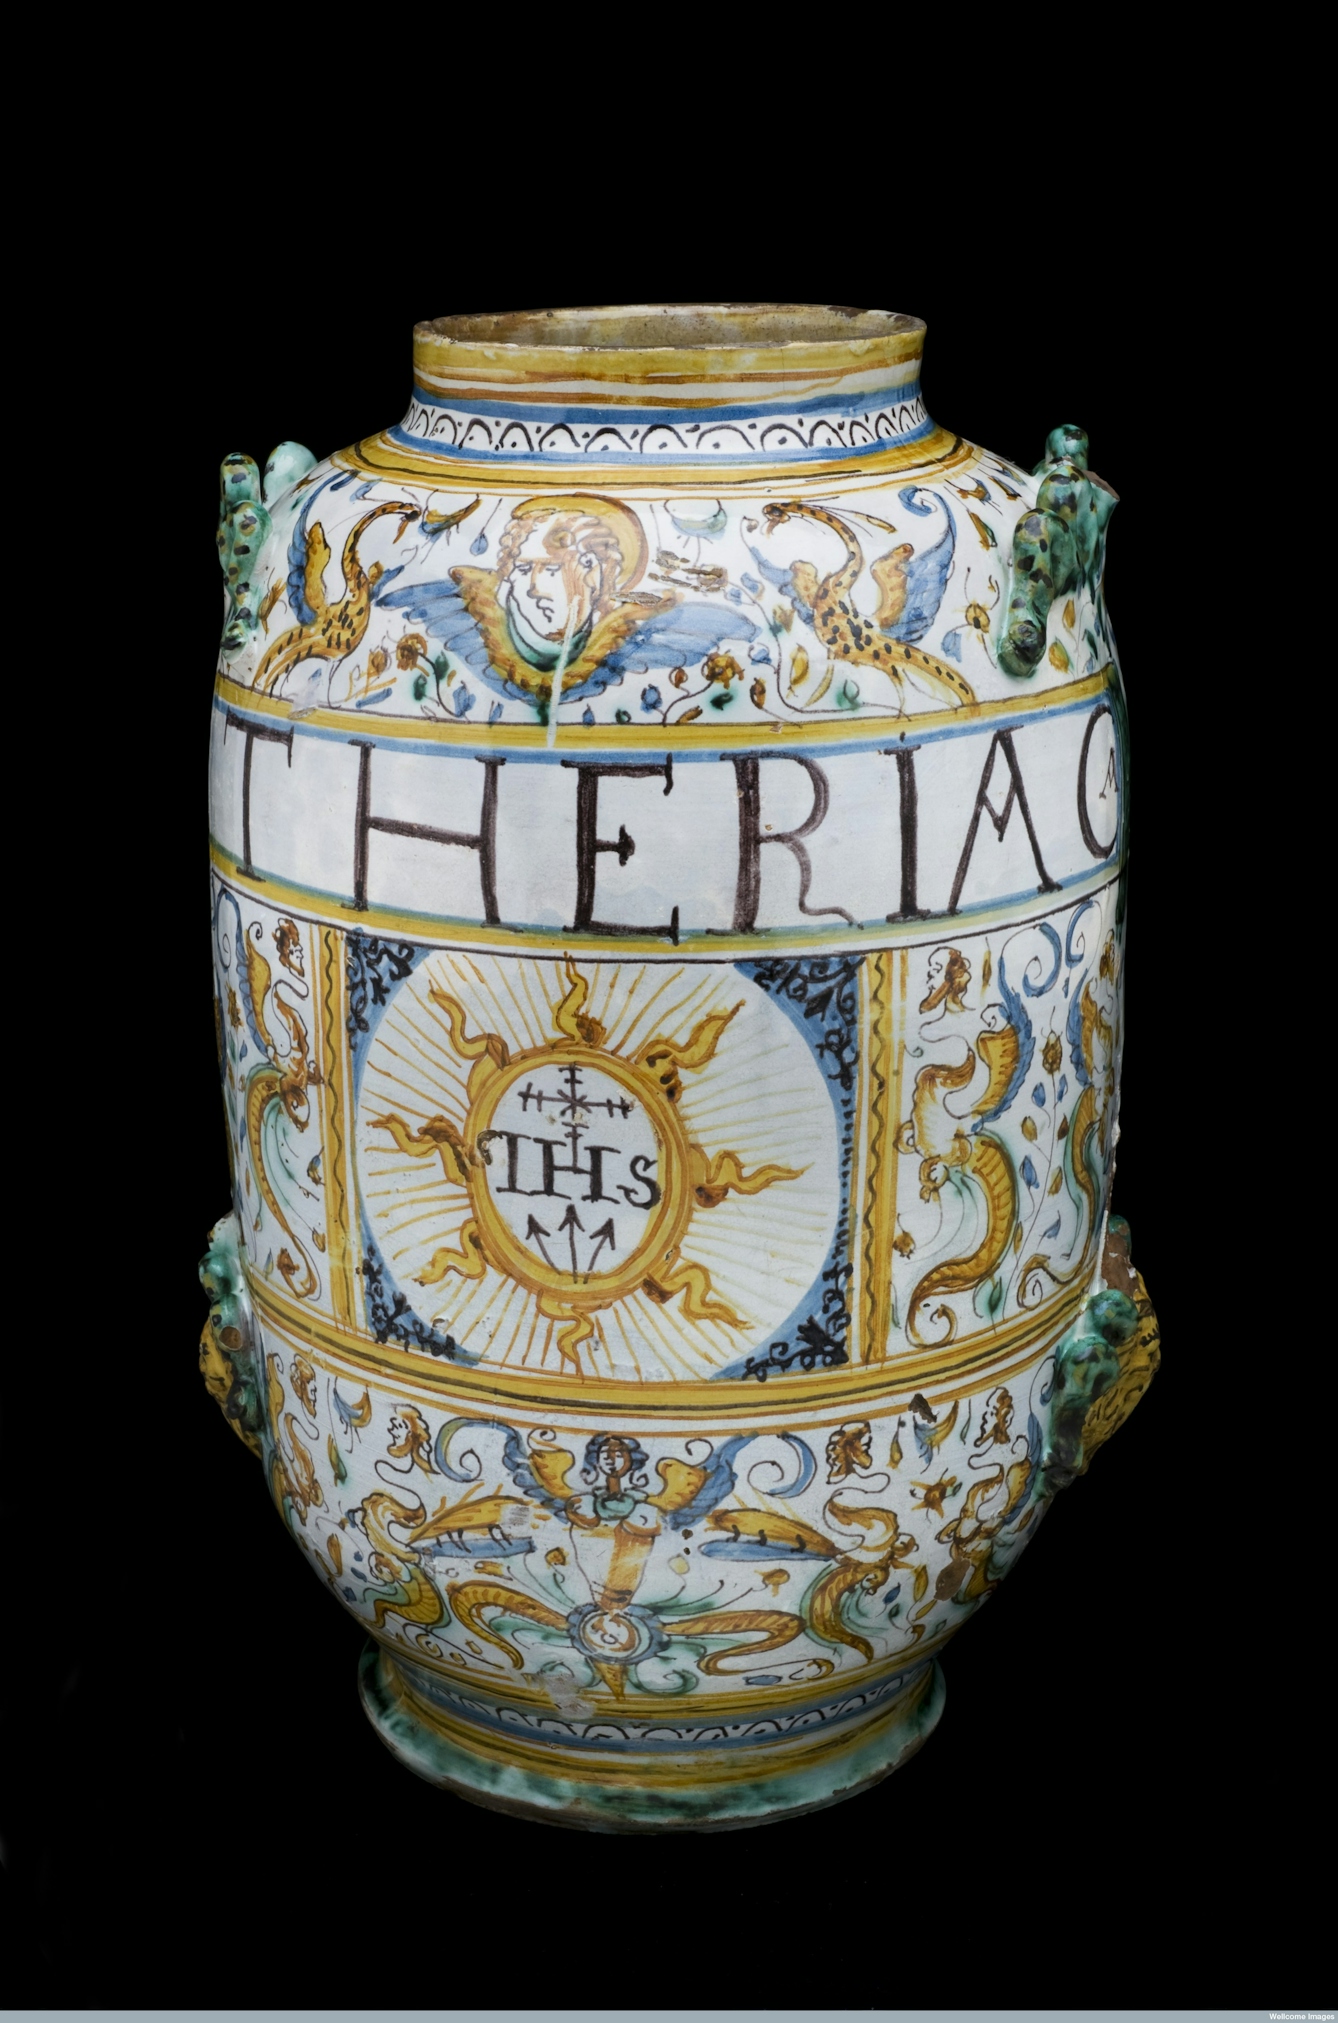 Display jar for theriac